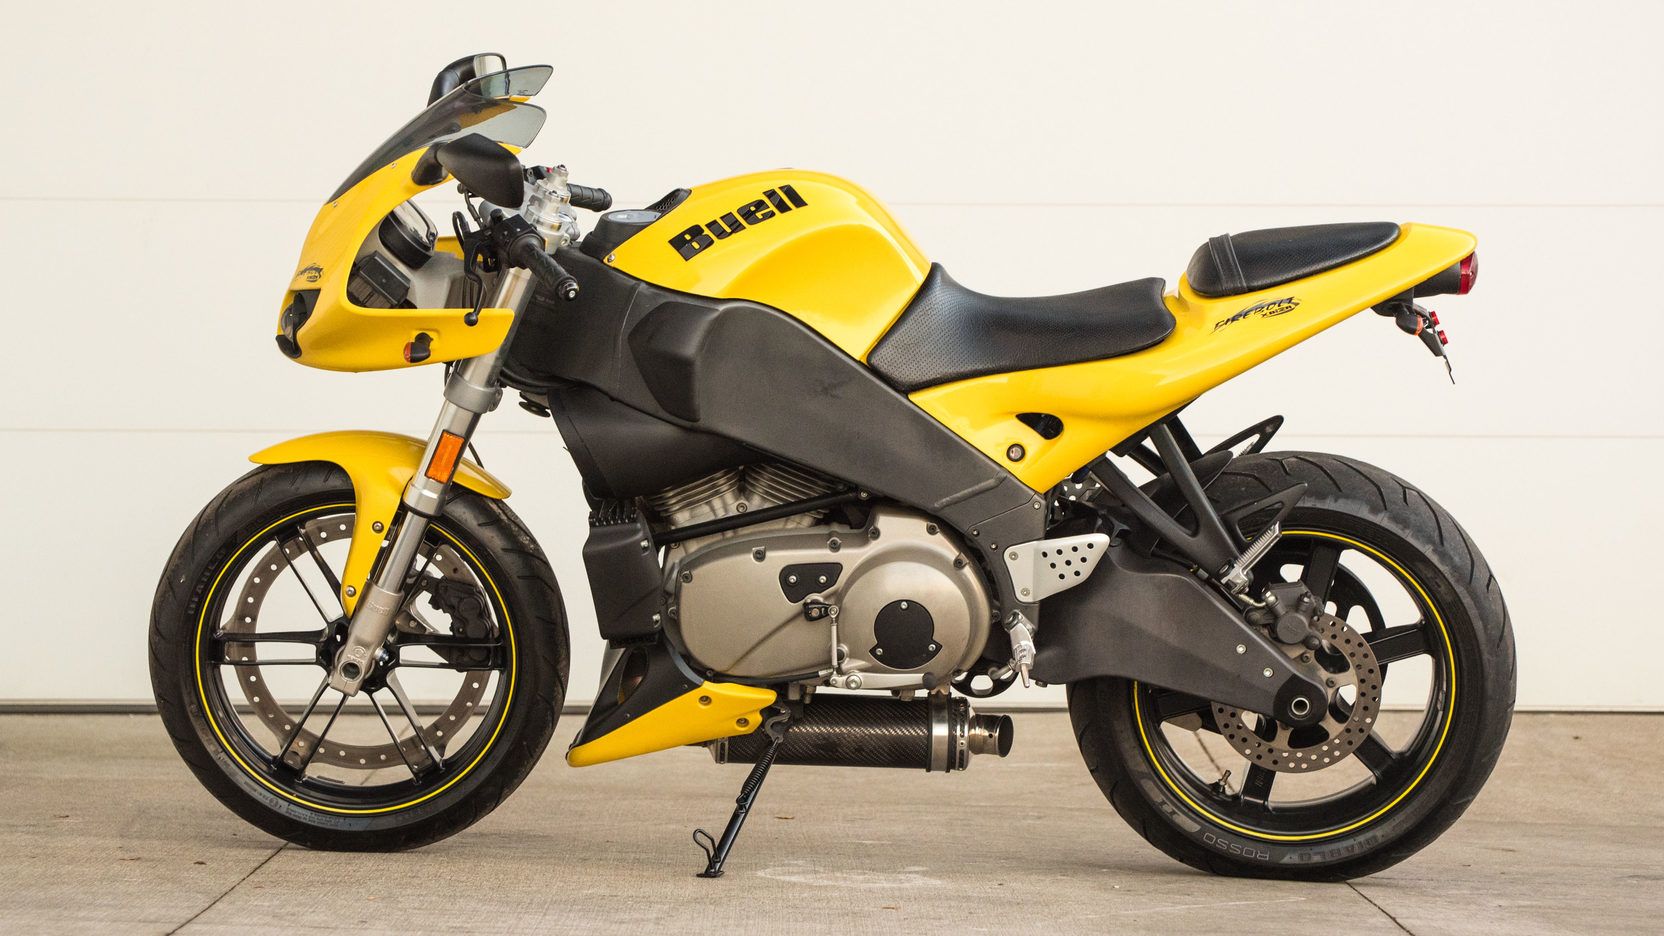 A yellow Buell Firebolt XB12R motorcycle